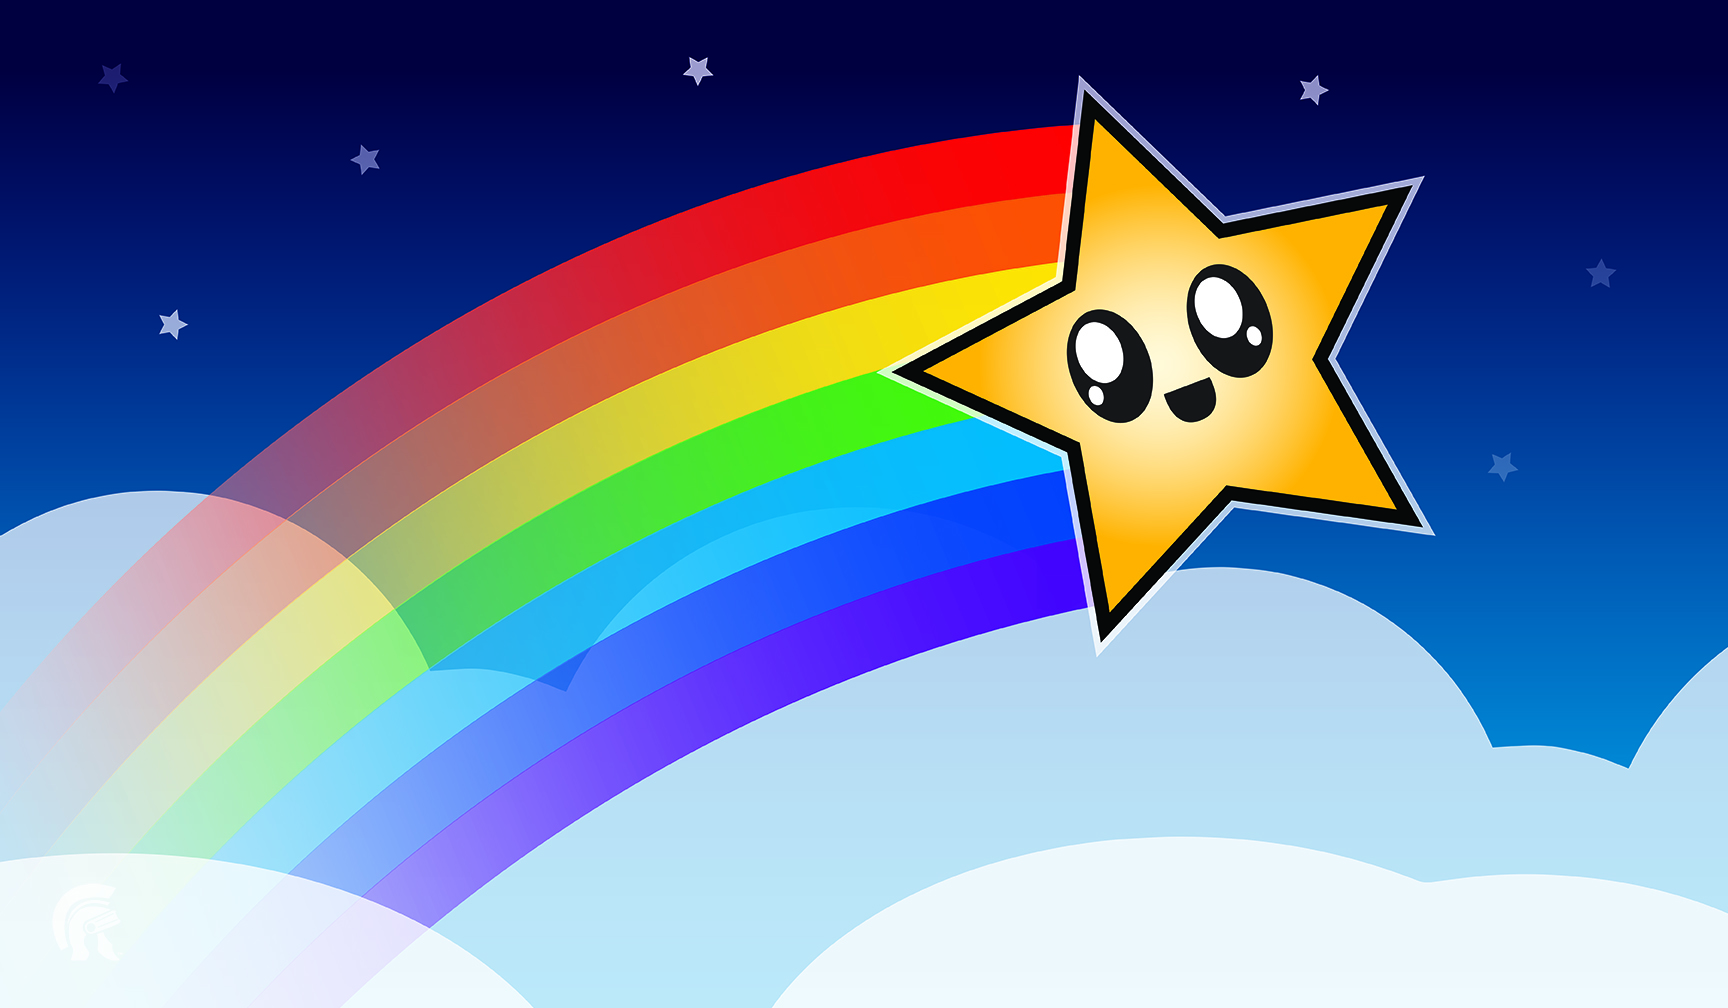 Legion Playmat - Rainbow Star